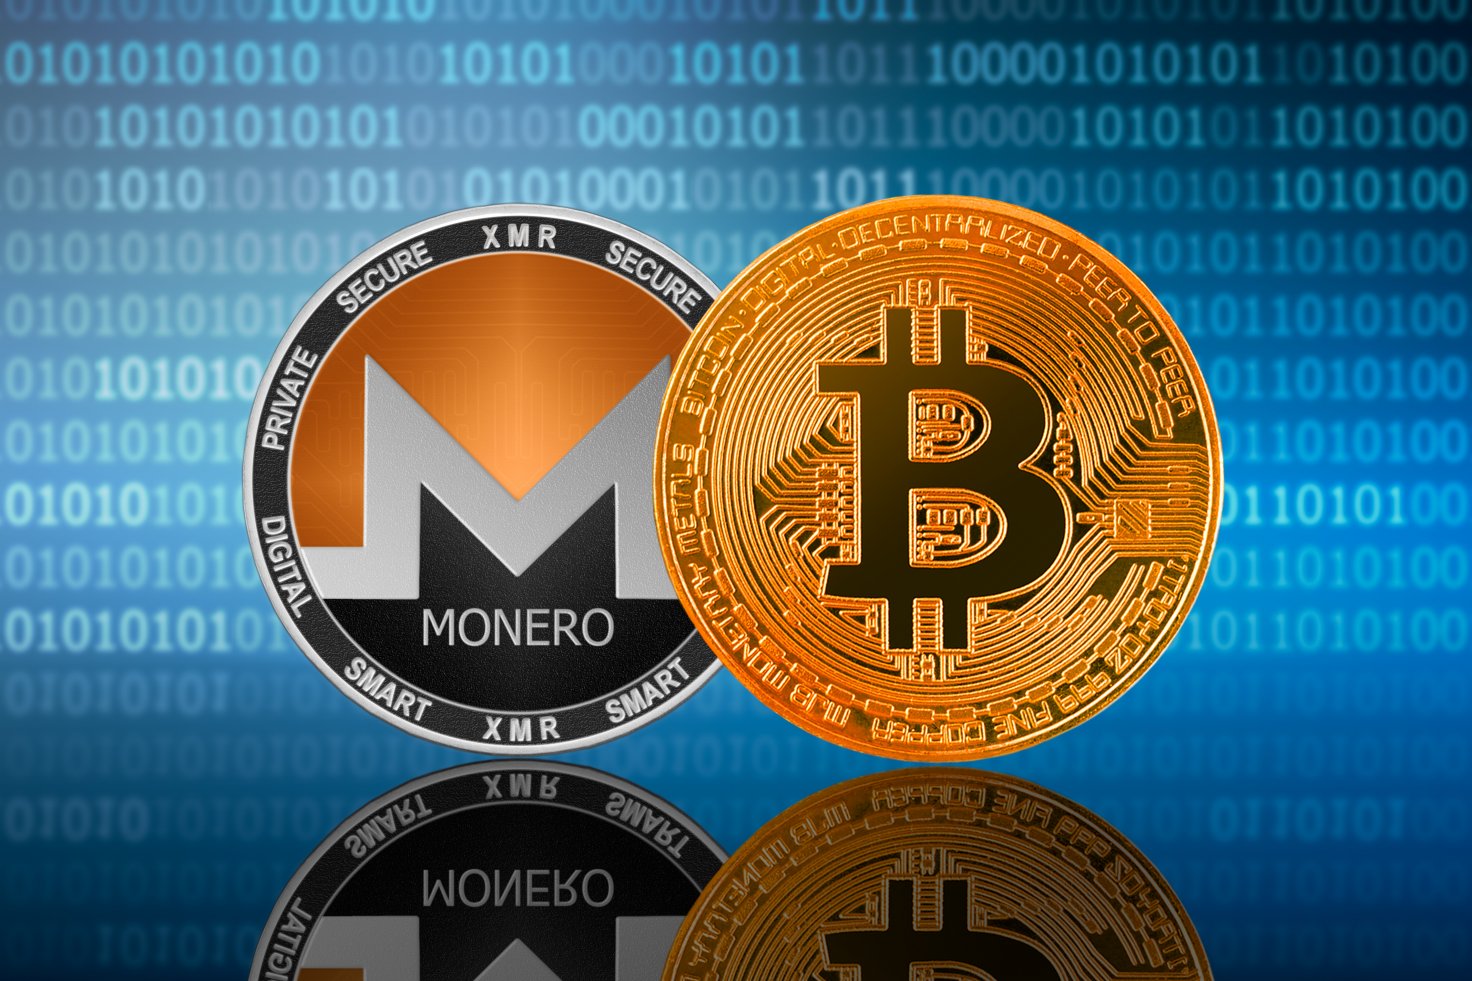 Monero is being used insteadof bitcoin bitcoin mining pdu